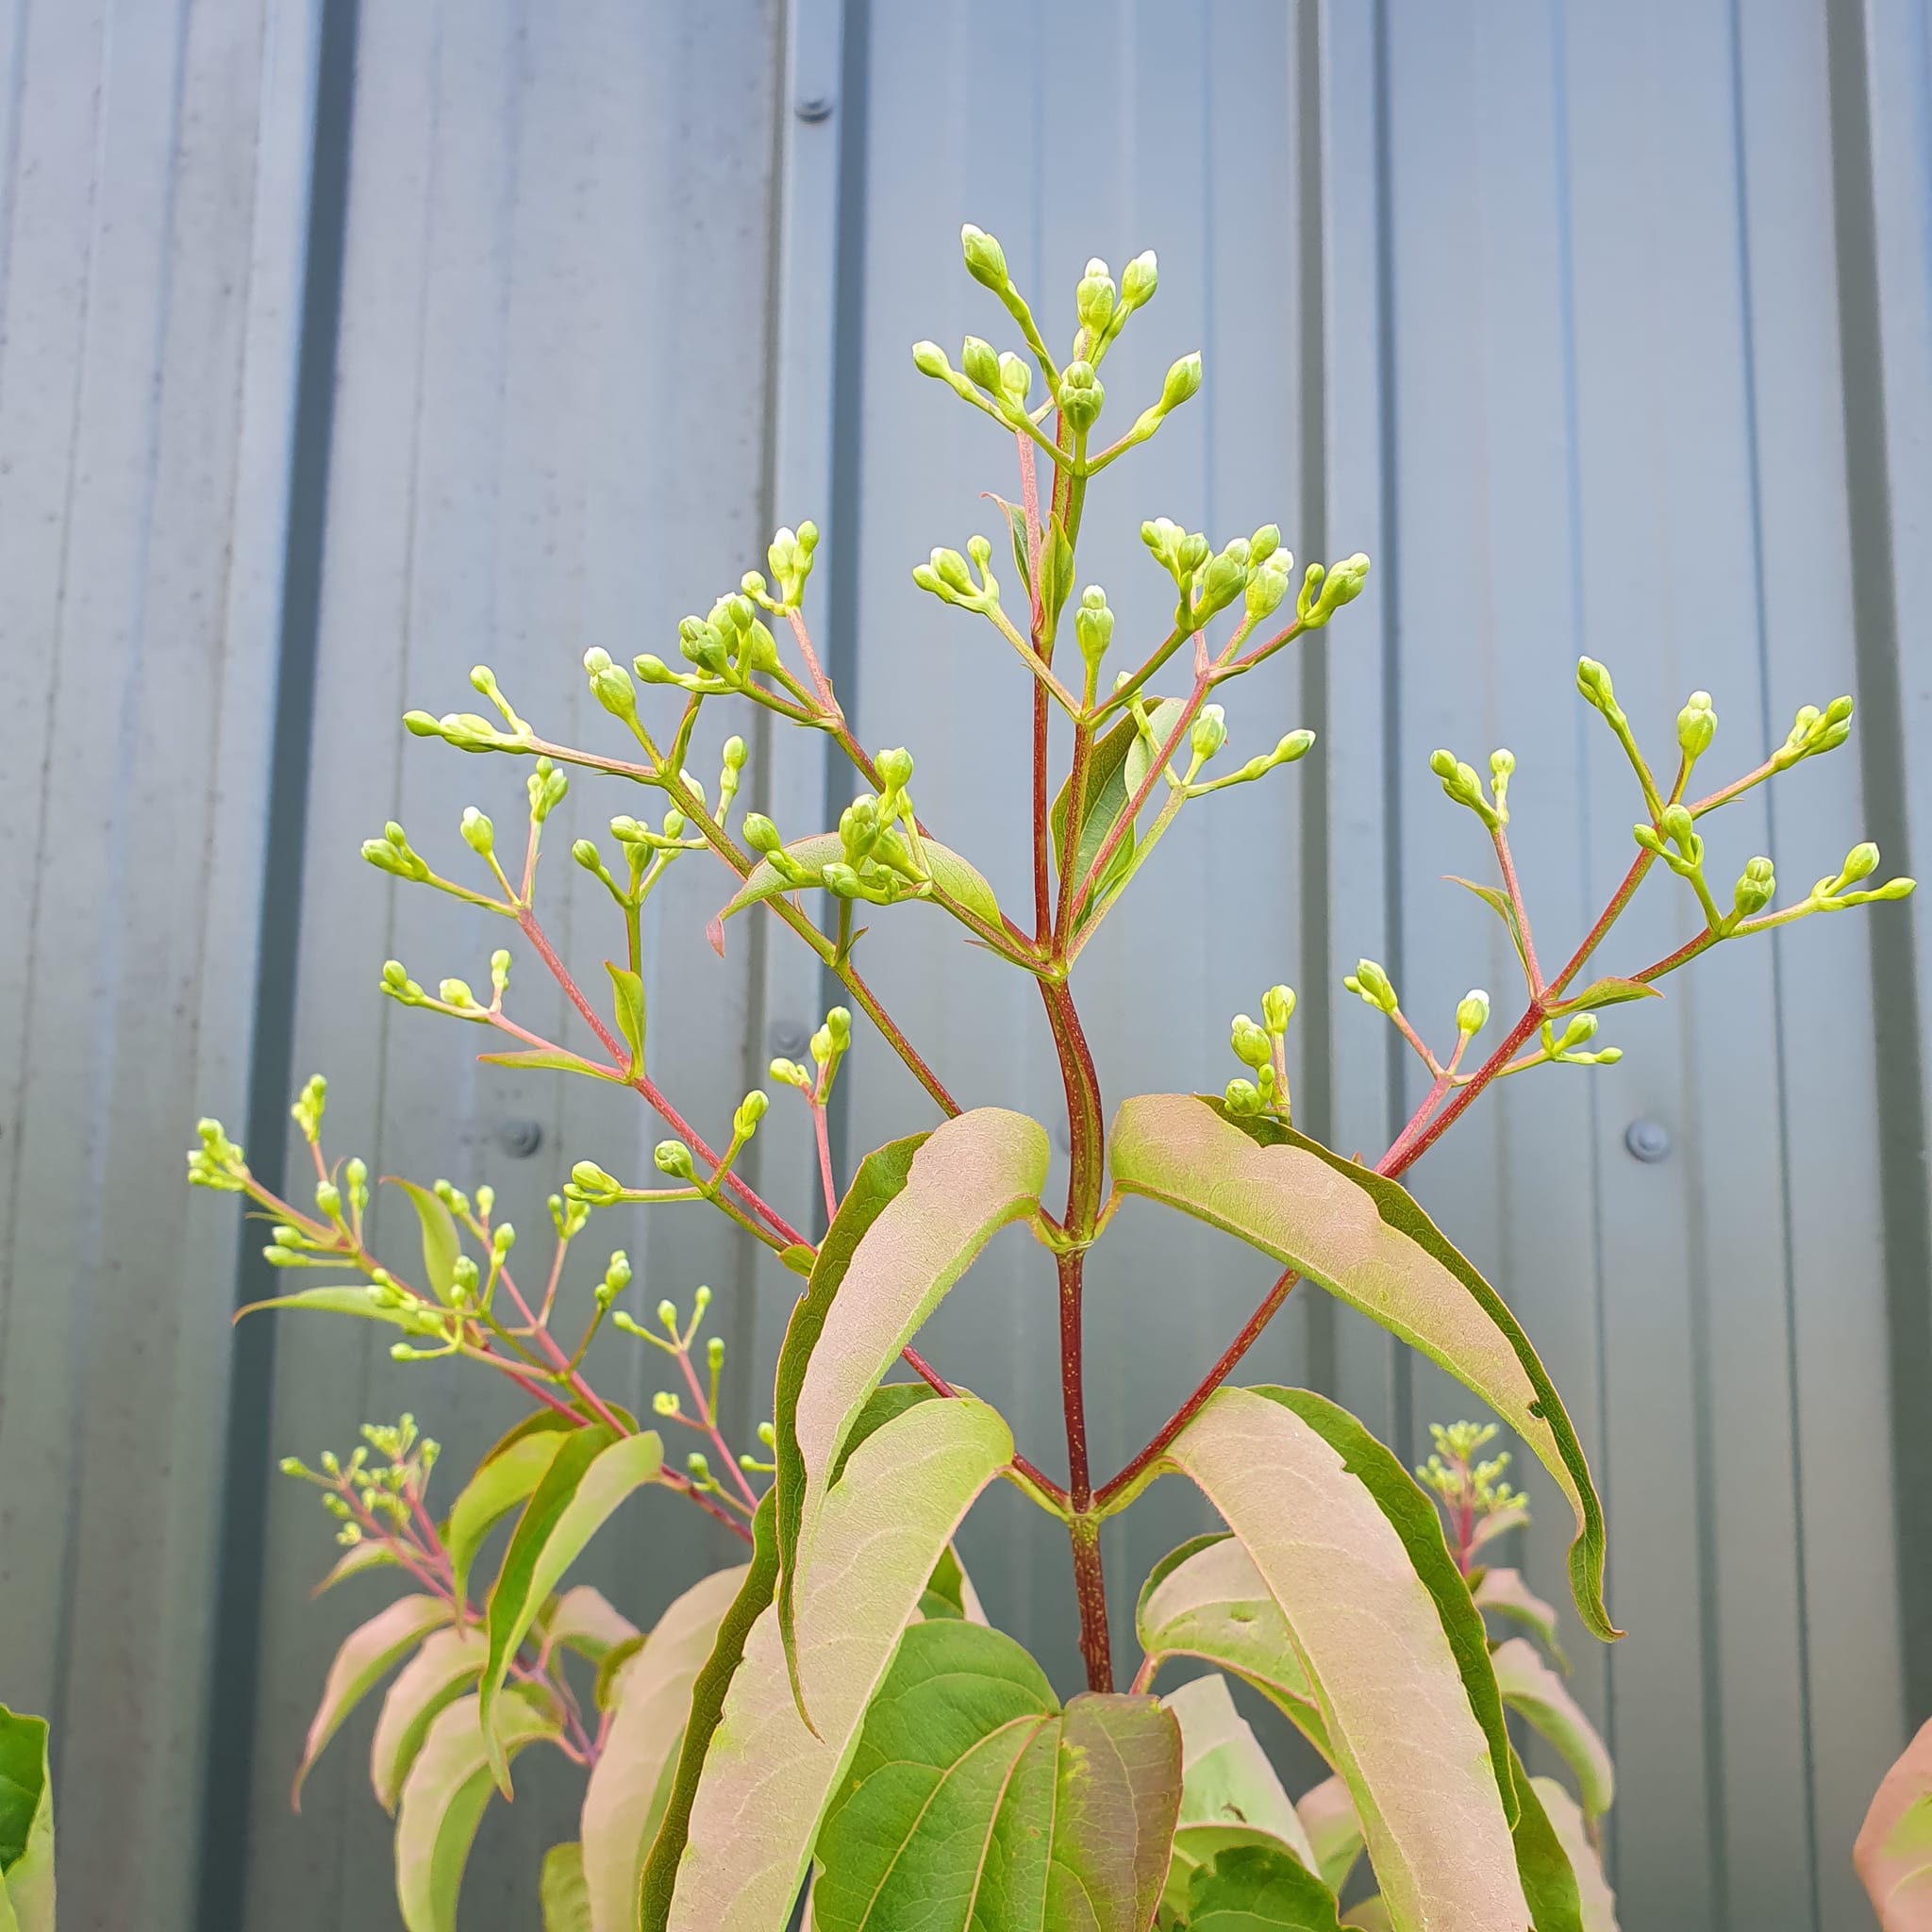 Heptacodium miconioides - Seven-son Flower Tree